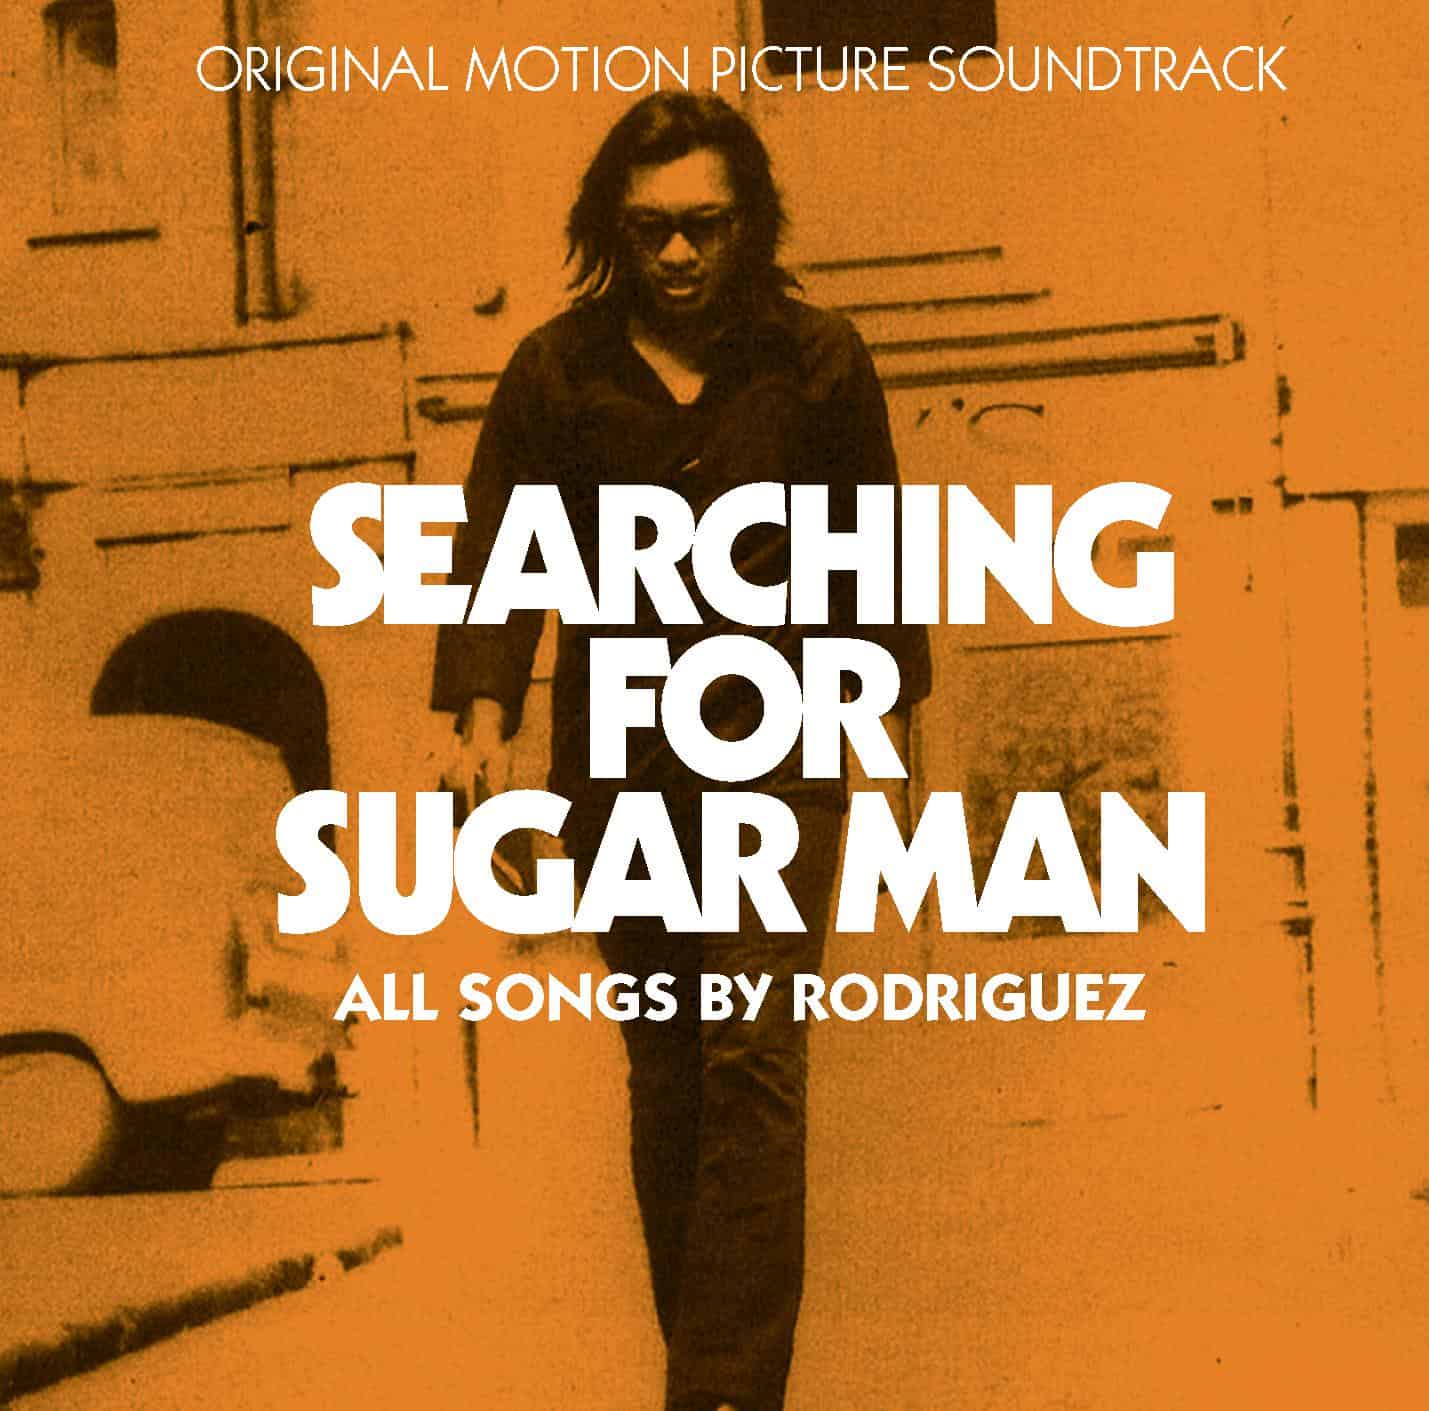 Platynowa Płyta dla Rodrigueza za album Searching For Sugar Man